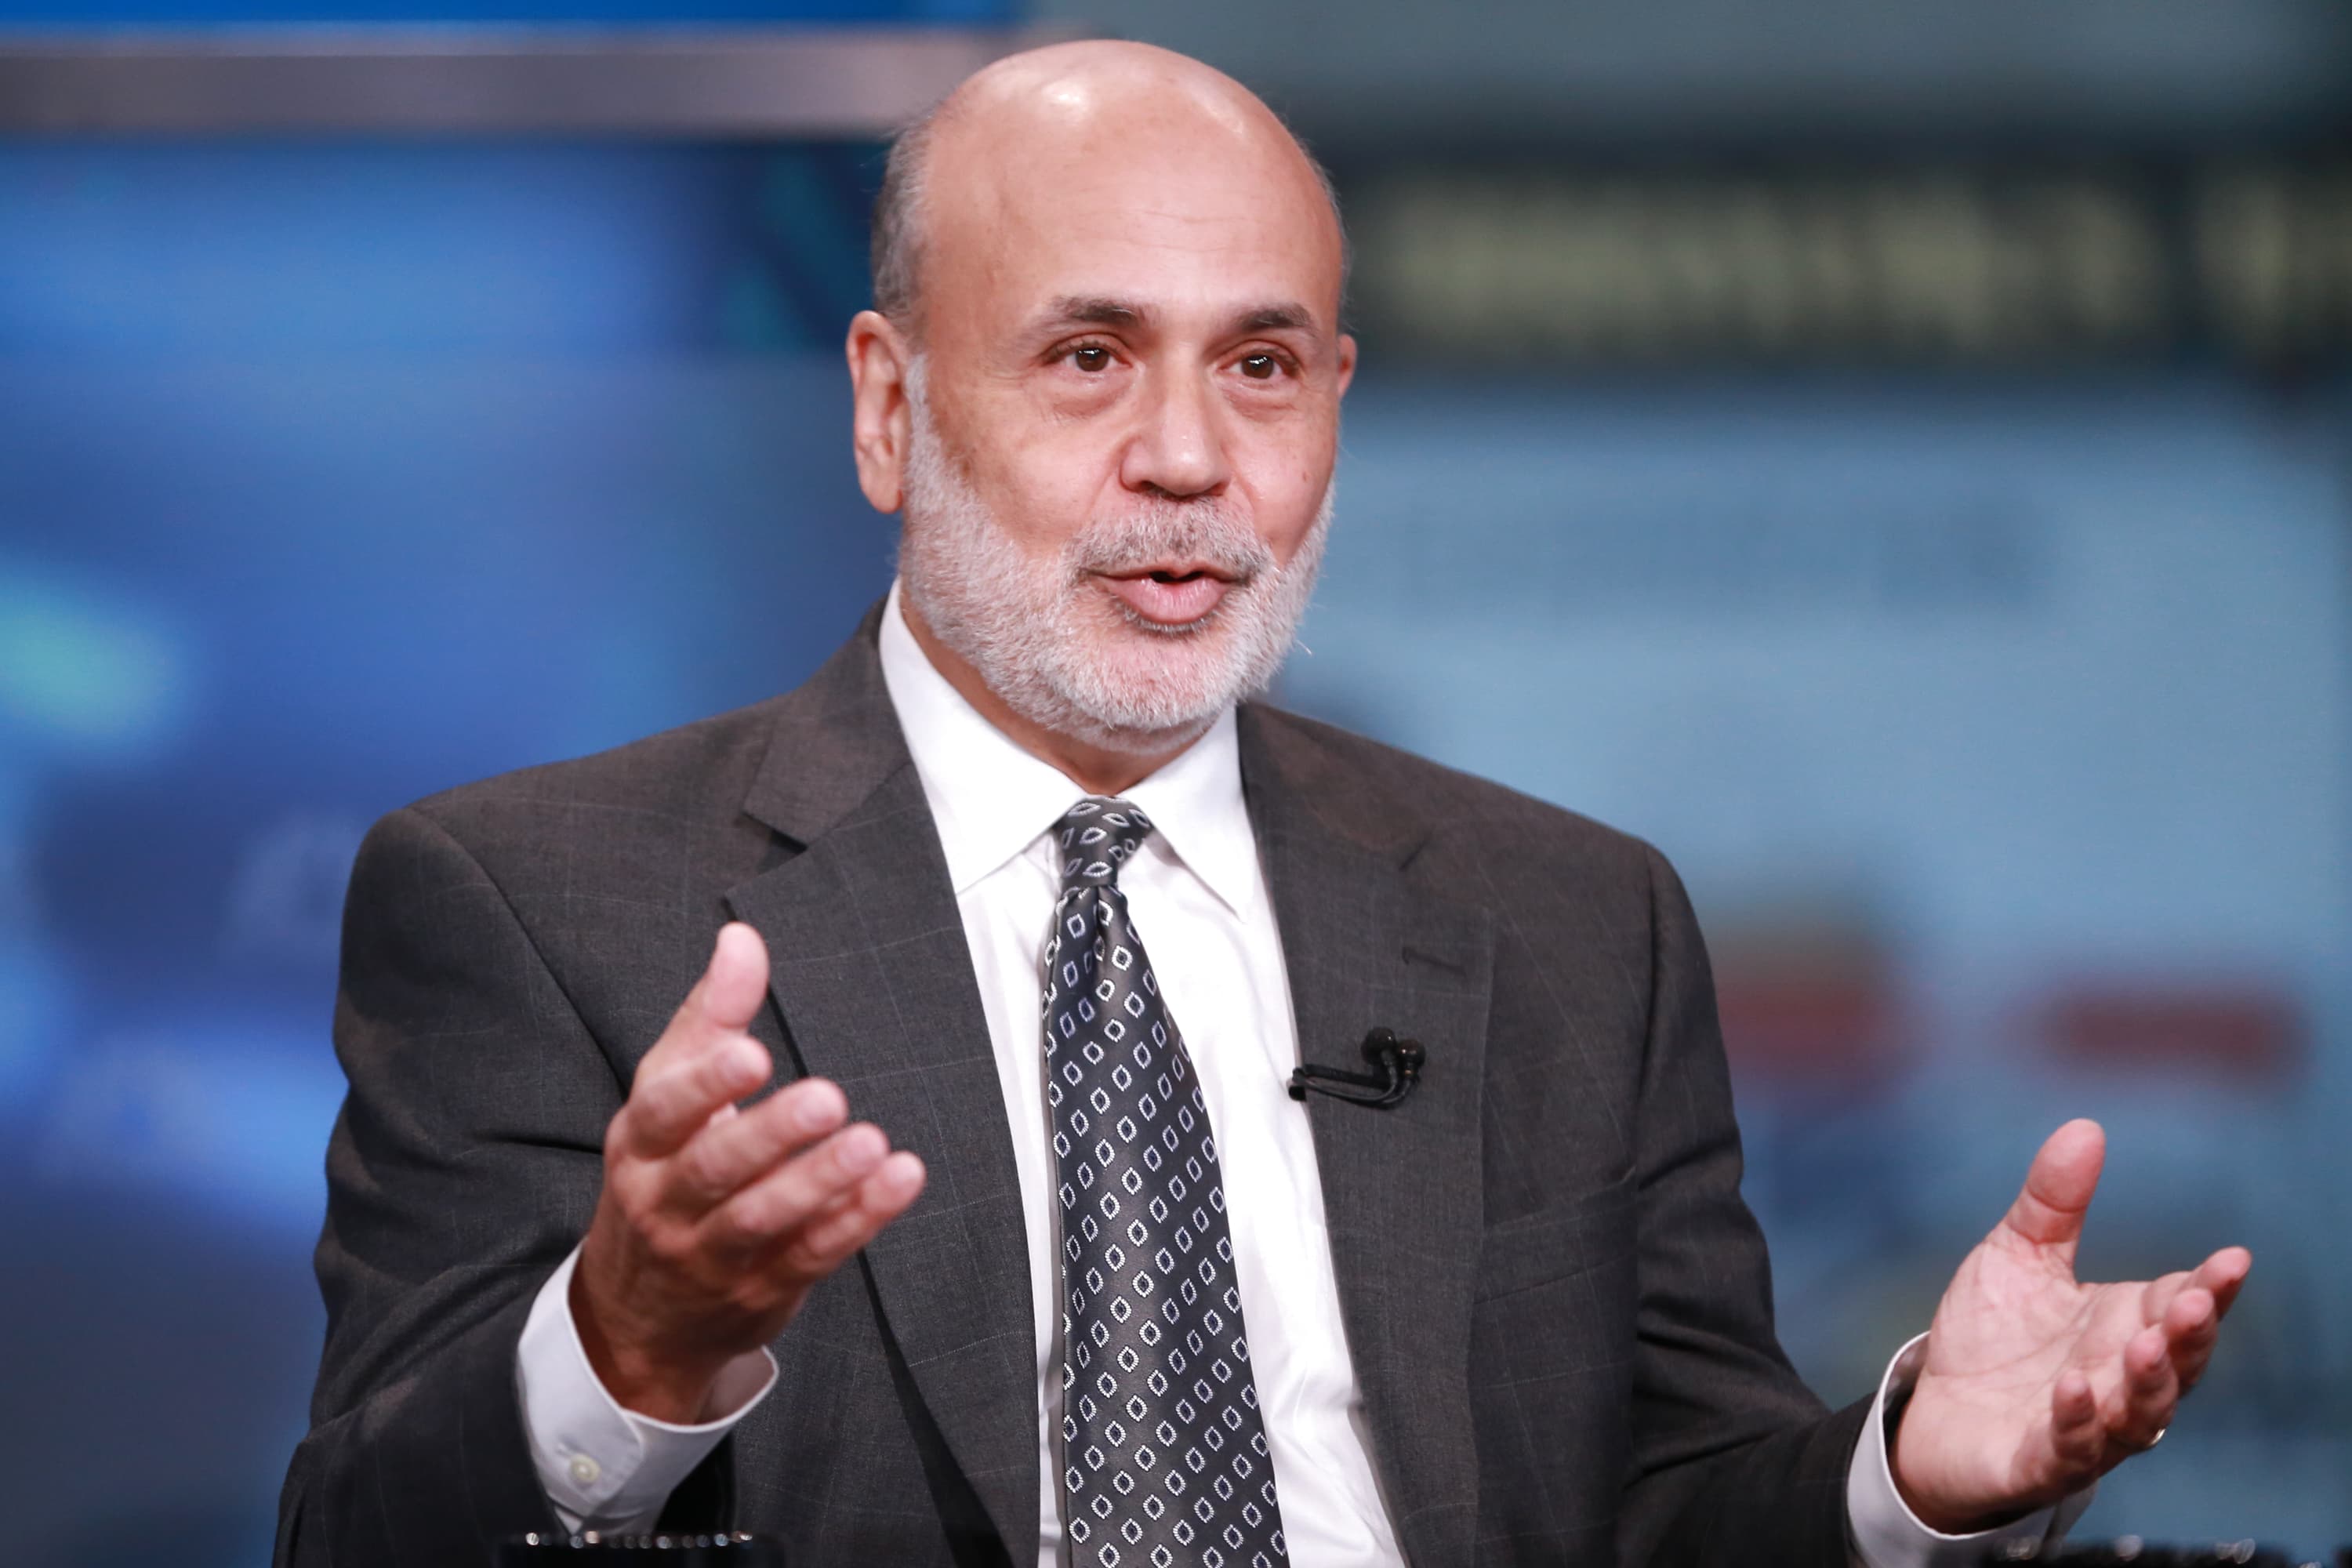 Bernanke: Coronavirus disruptions 'much closer to a major snowstorm' than the Great Depression